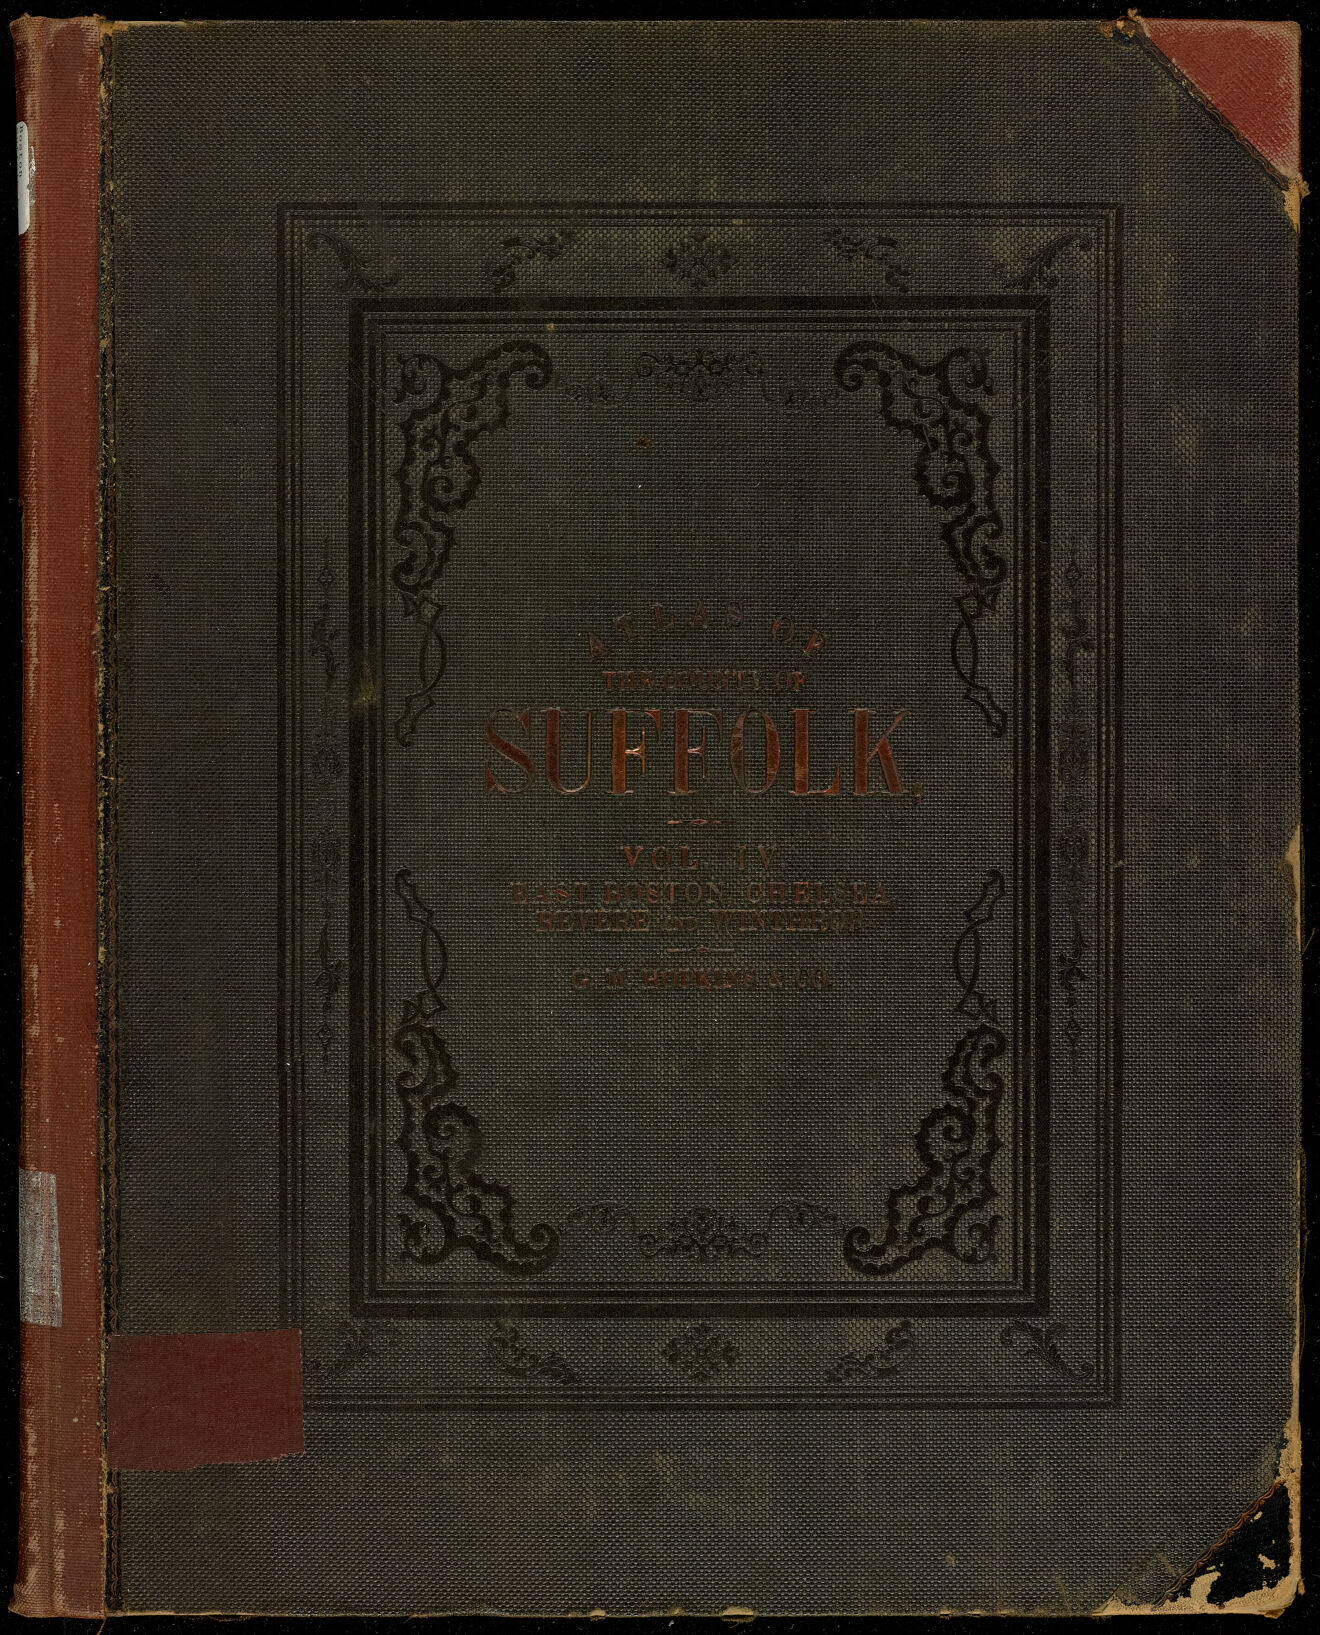 Atlas of the county of Suffolk, Massachusetts, vol. 4